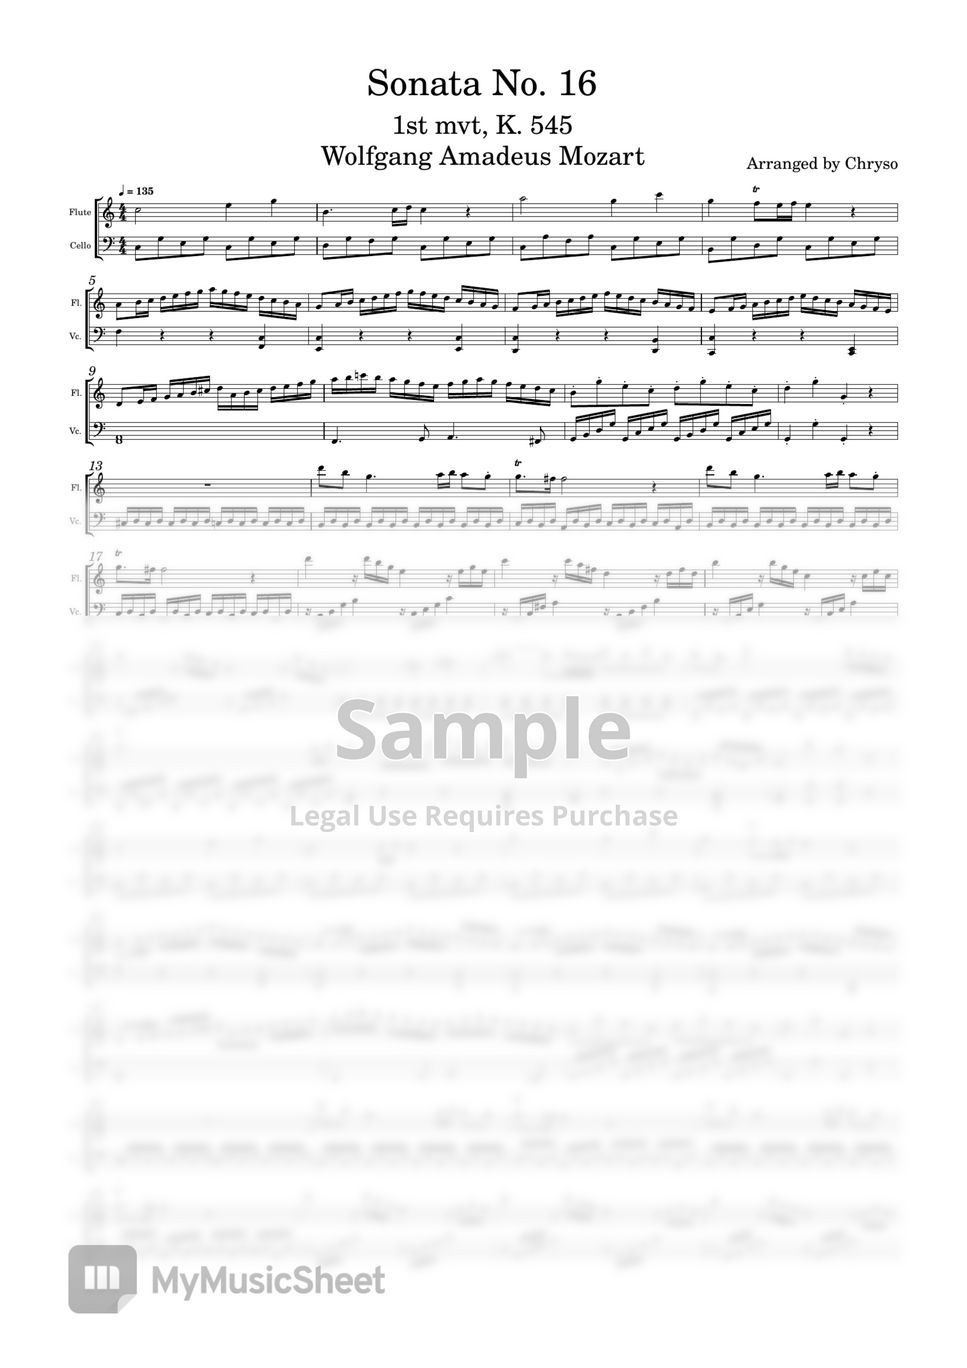 Wolfgang Amadeus Mozart - 55. Sonata No. 16 (mscz) by Chryso_Chrysoberyl